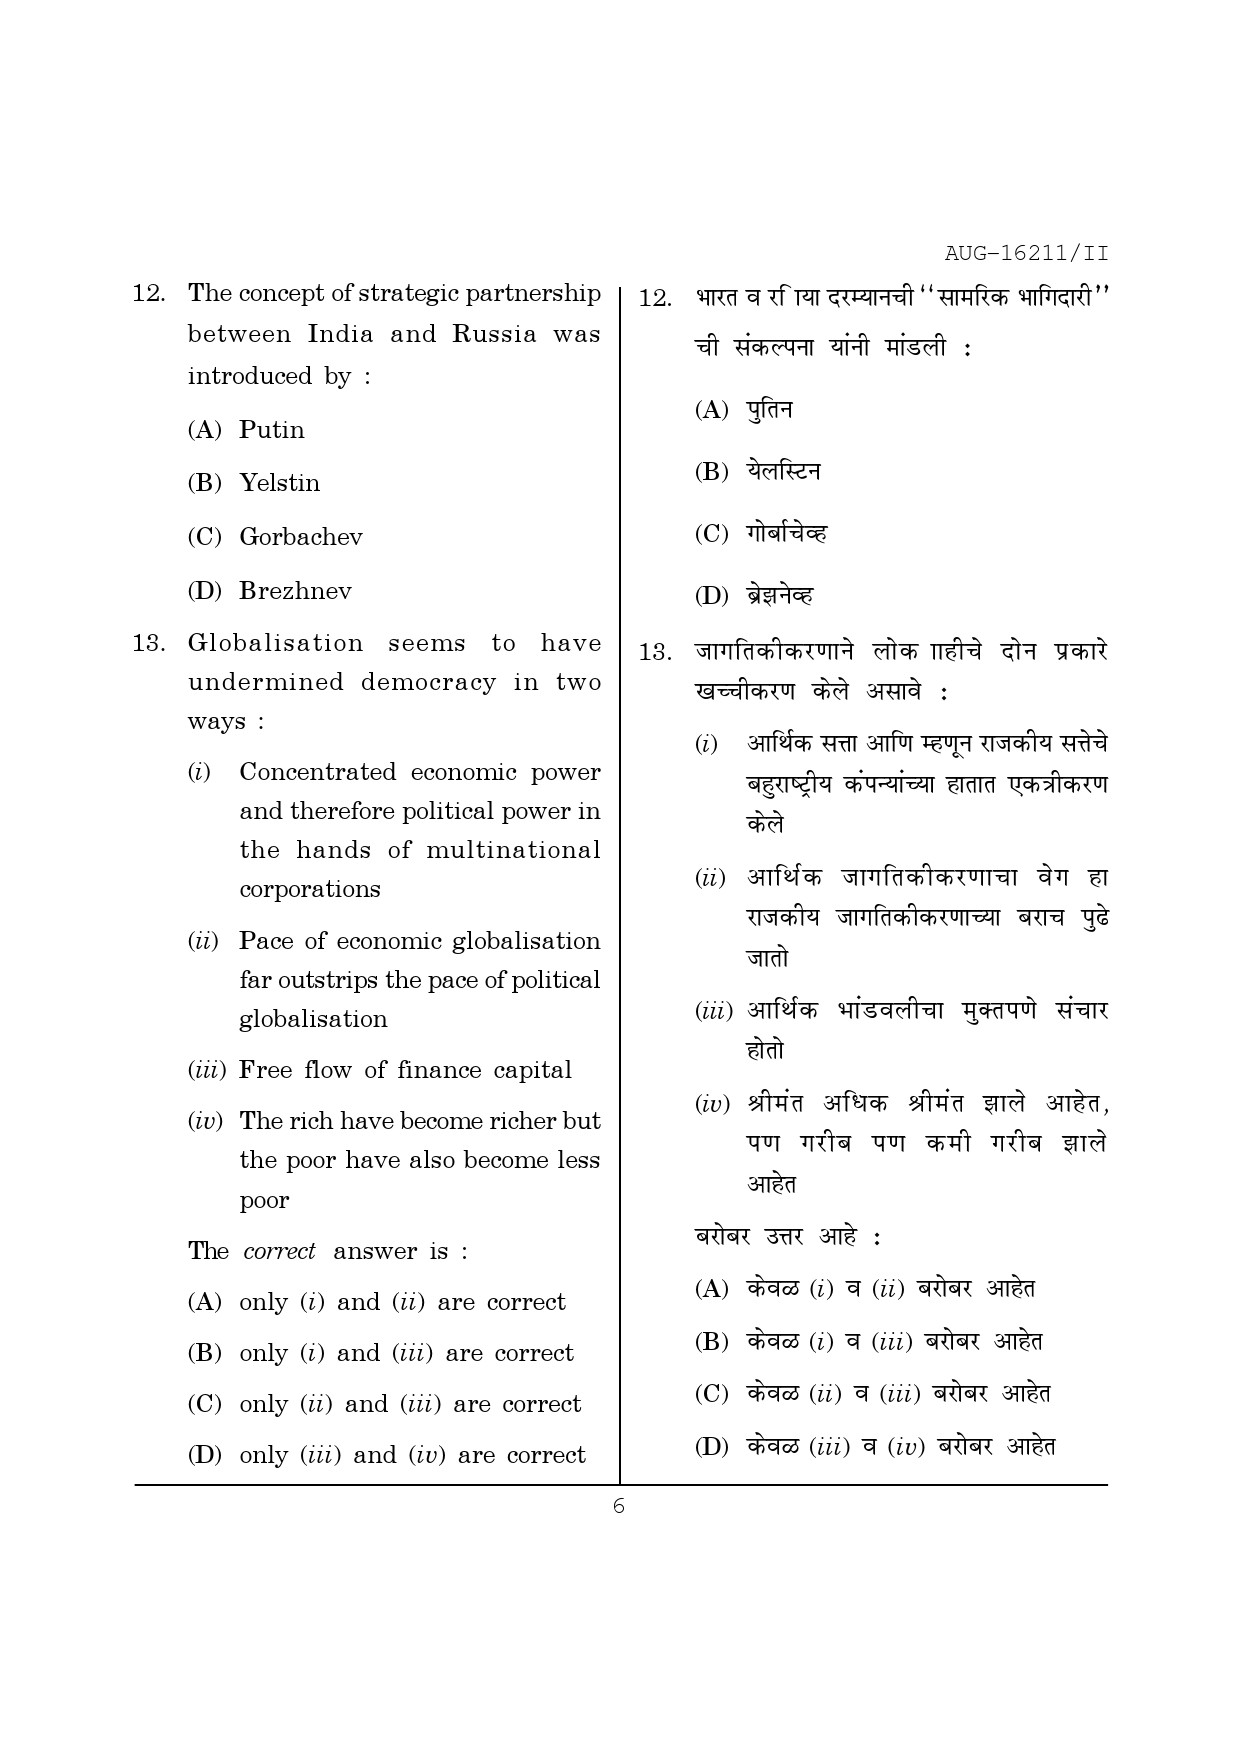 Maharashtra SET Defence and Strategic Studies Question Paper II August 2011 6